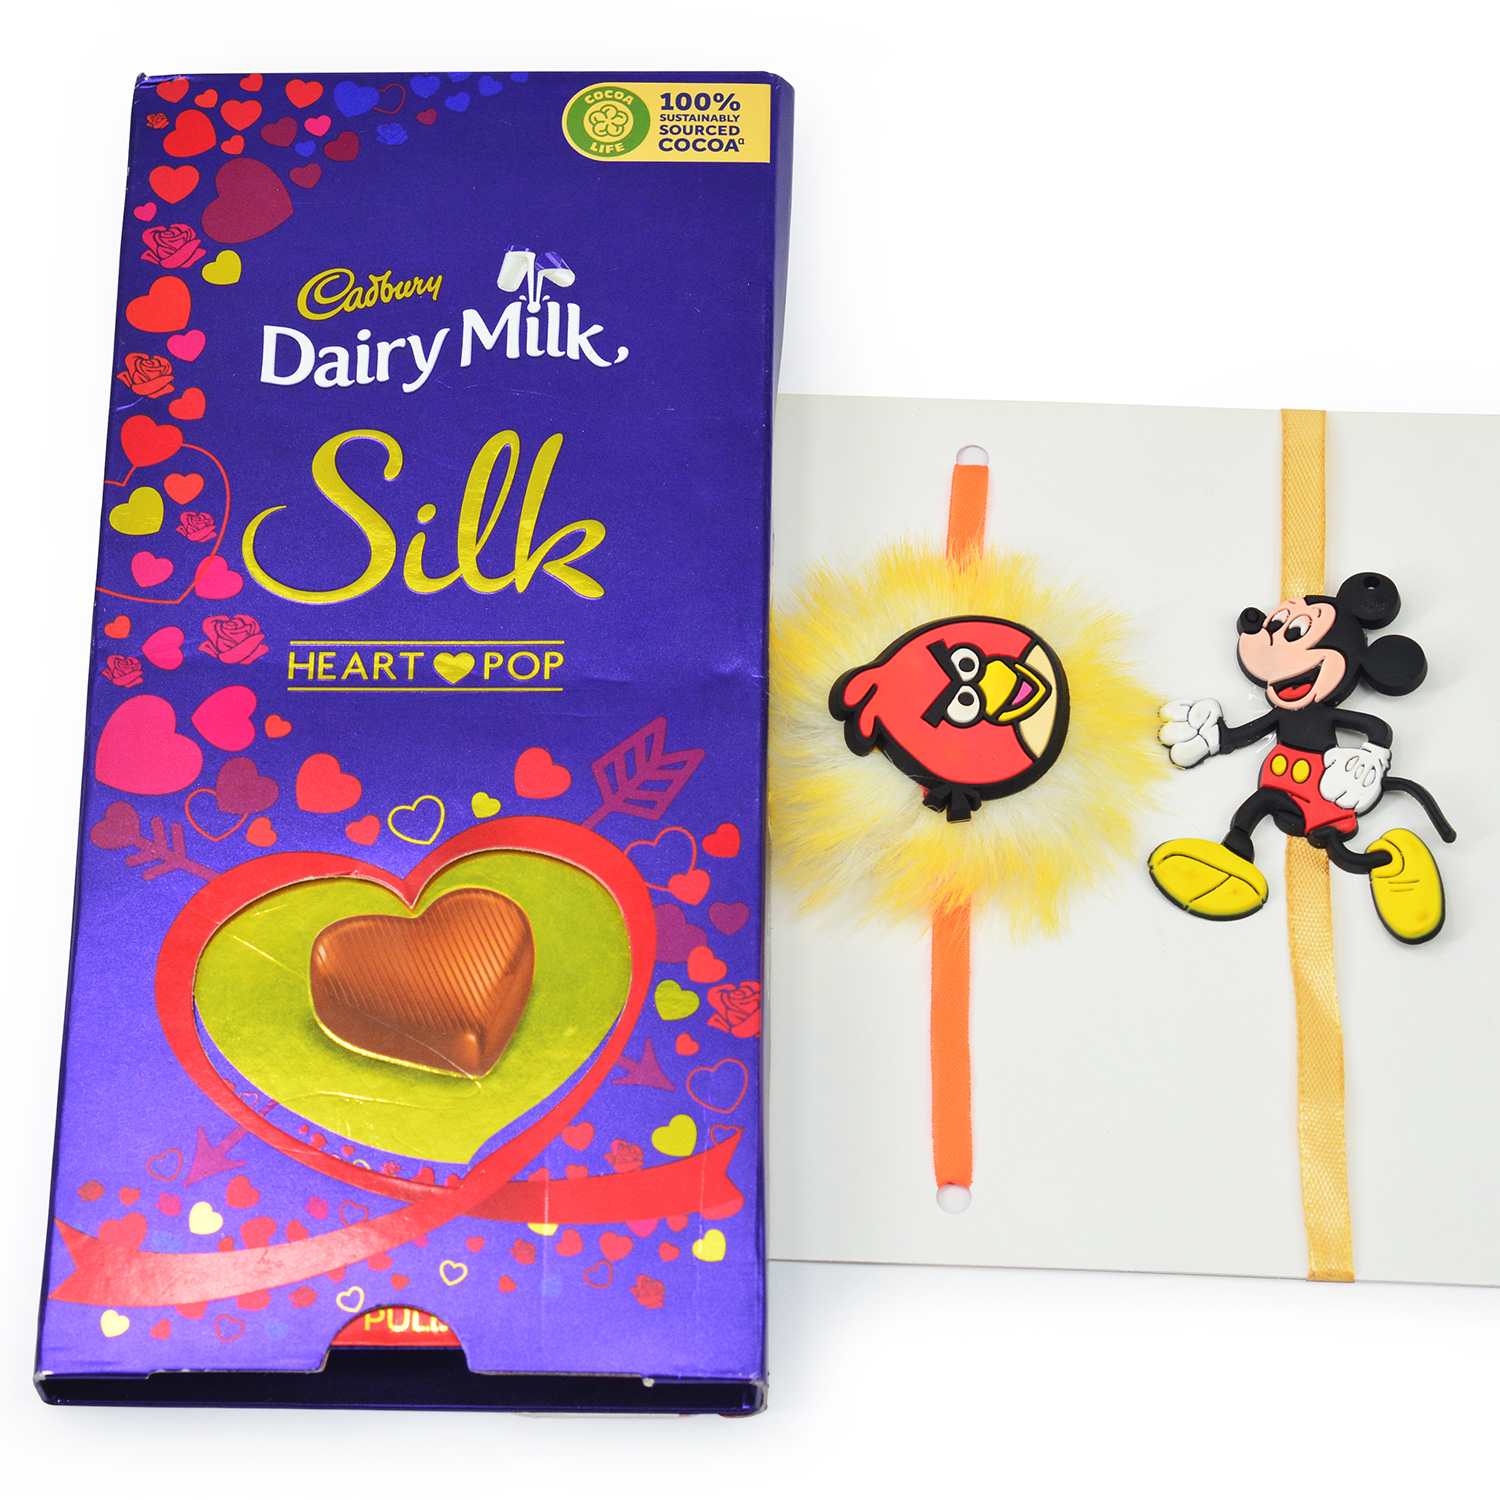 Delicious Silk Hear Pop Chocolate By Dairy Milk with Tow Cartoon Kids Rakhi